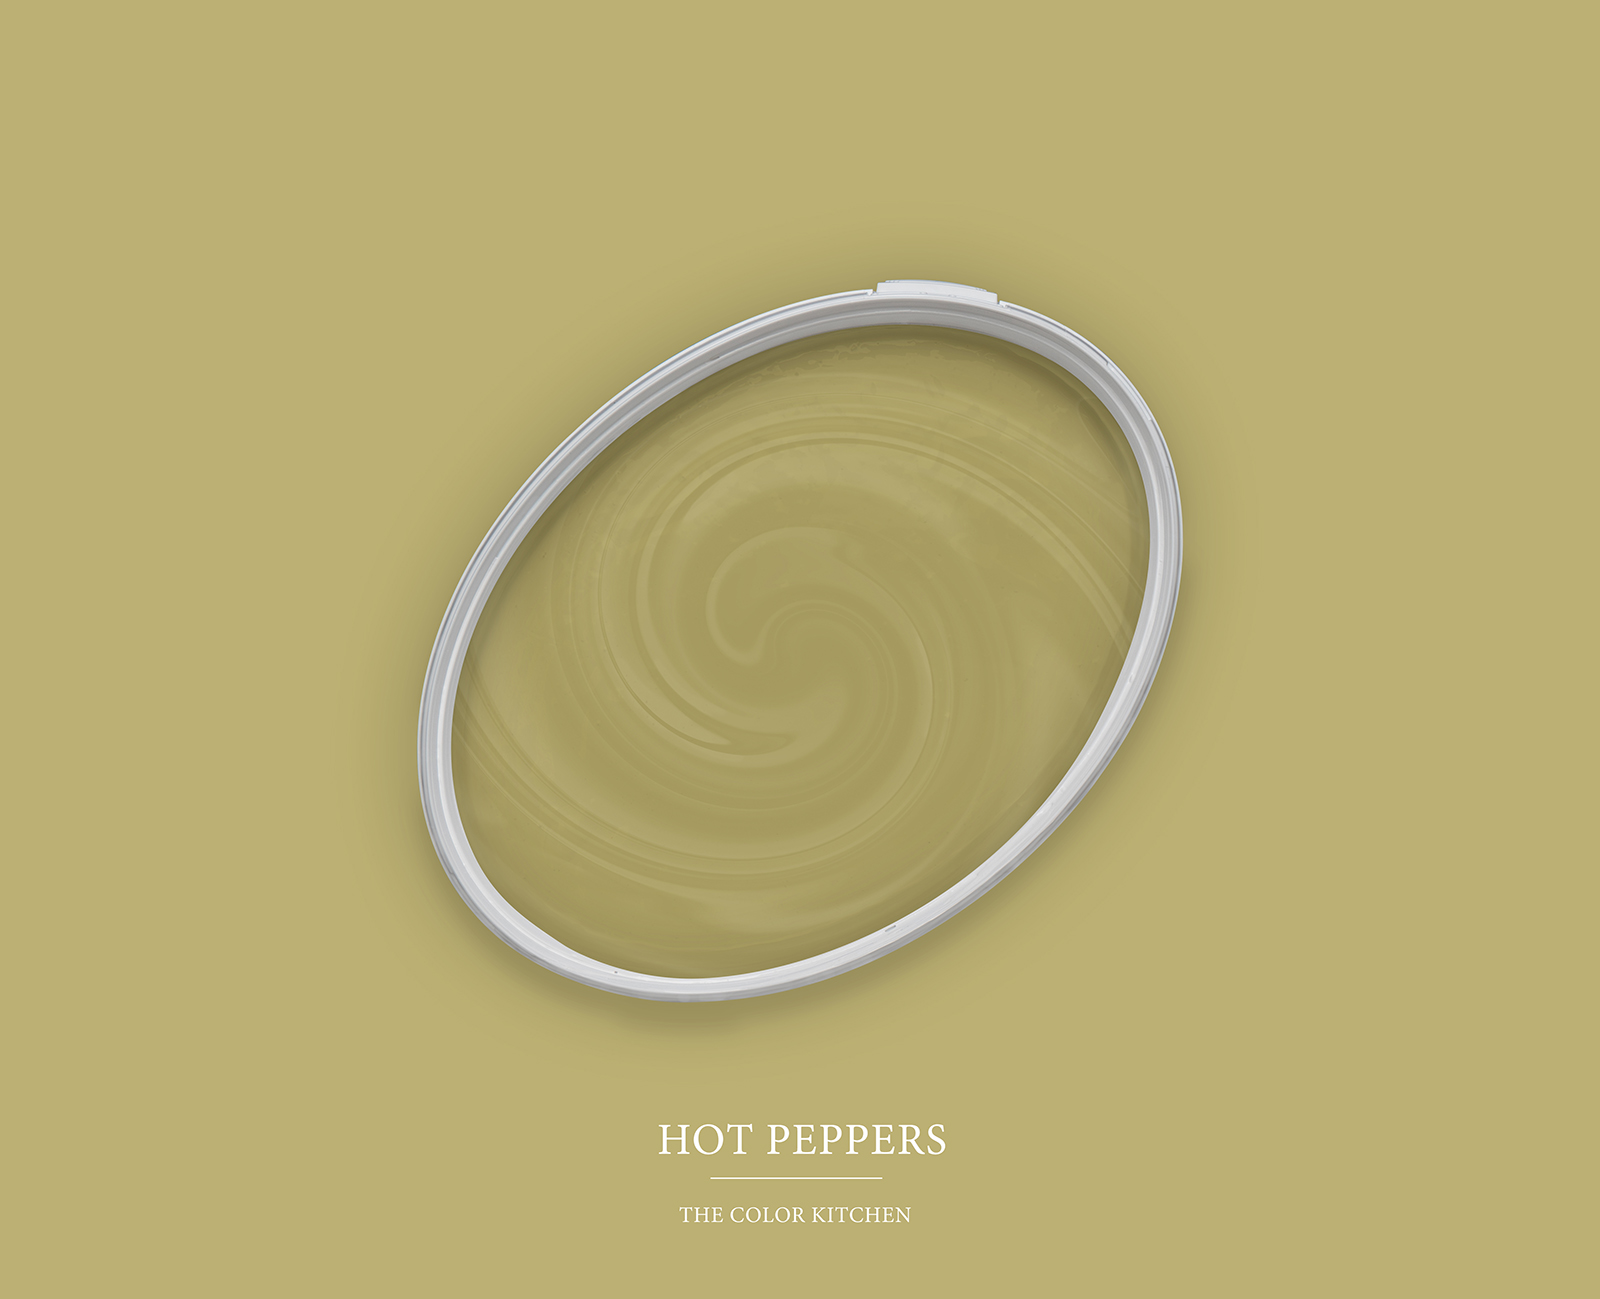         Wandfarbe TCK4011 »Hot Peppers« in entspannendem Grün – 2,5 Liter
    